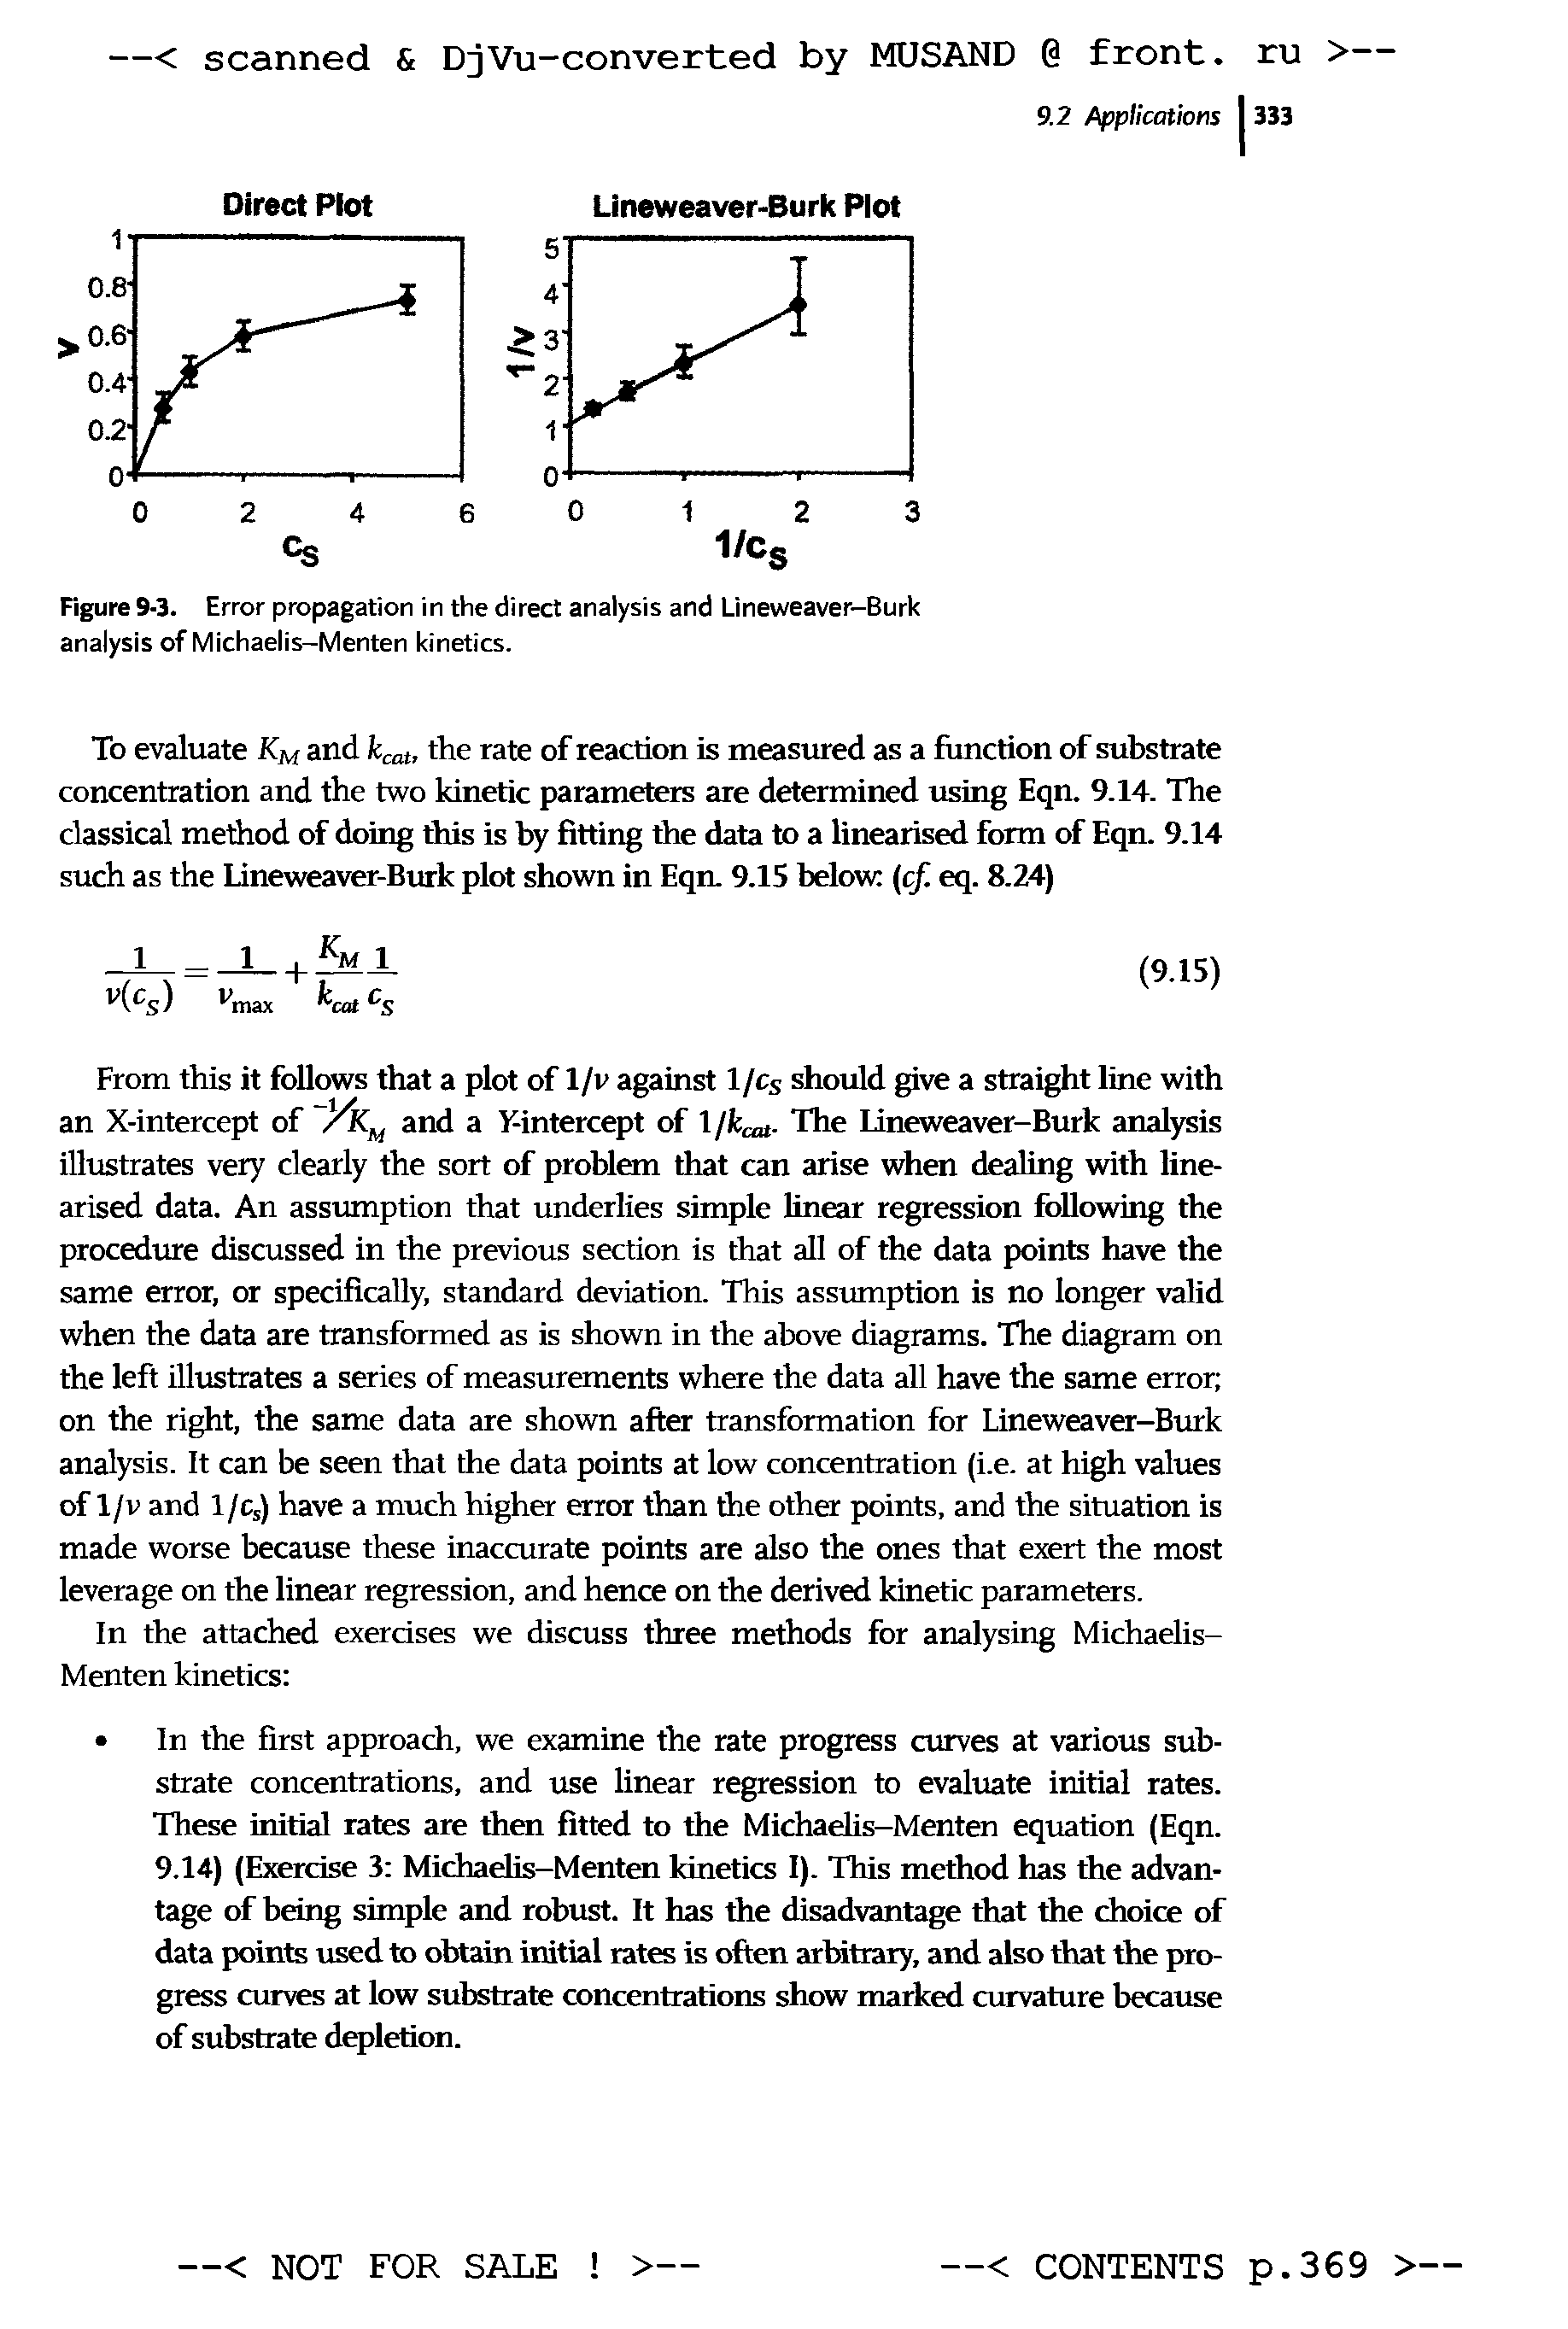 Figure 9-3. Error propagation in the direct analysis and Lineweaver-Burk analysis of Michaelis-Menten kinetics.